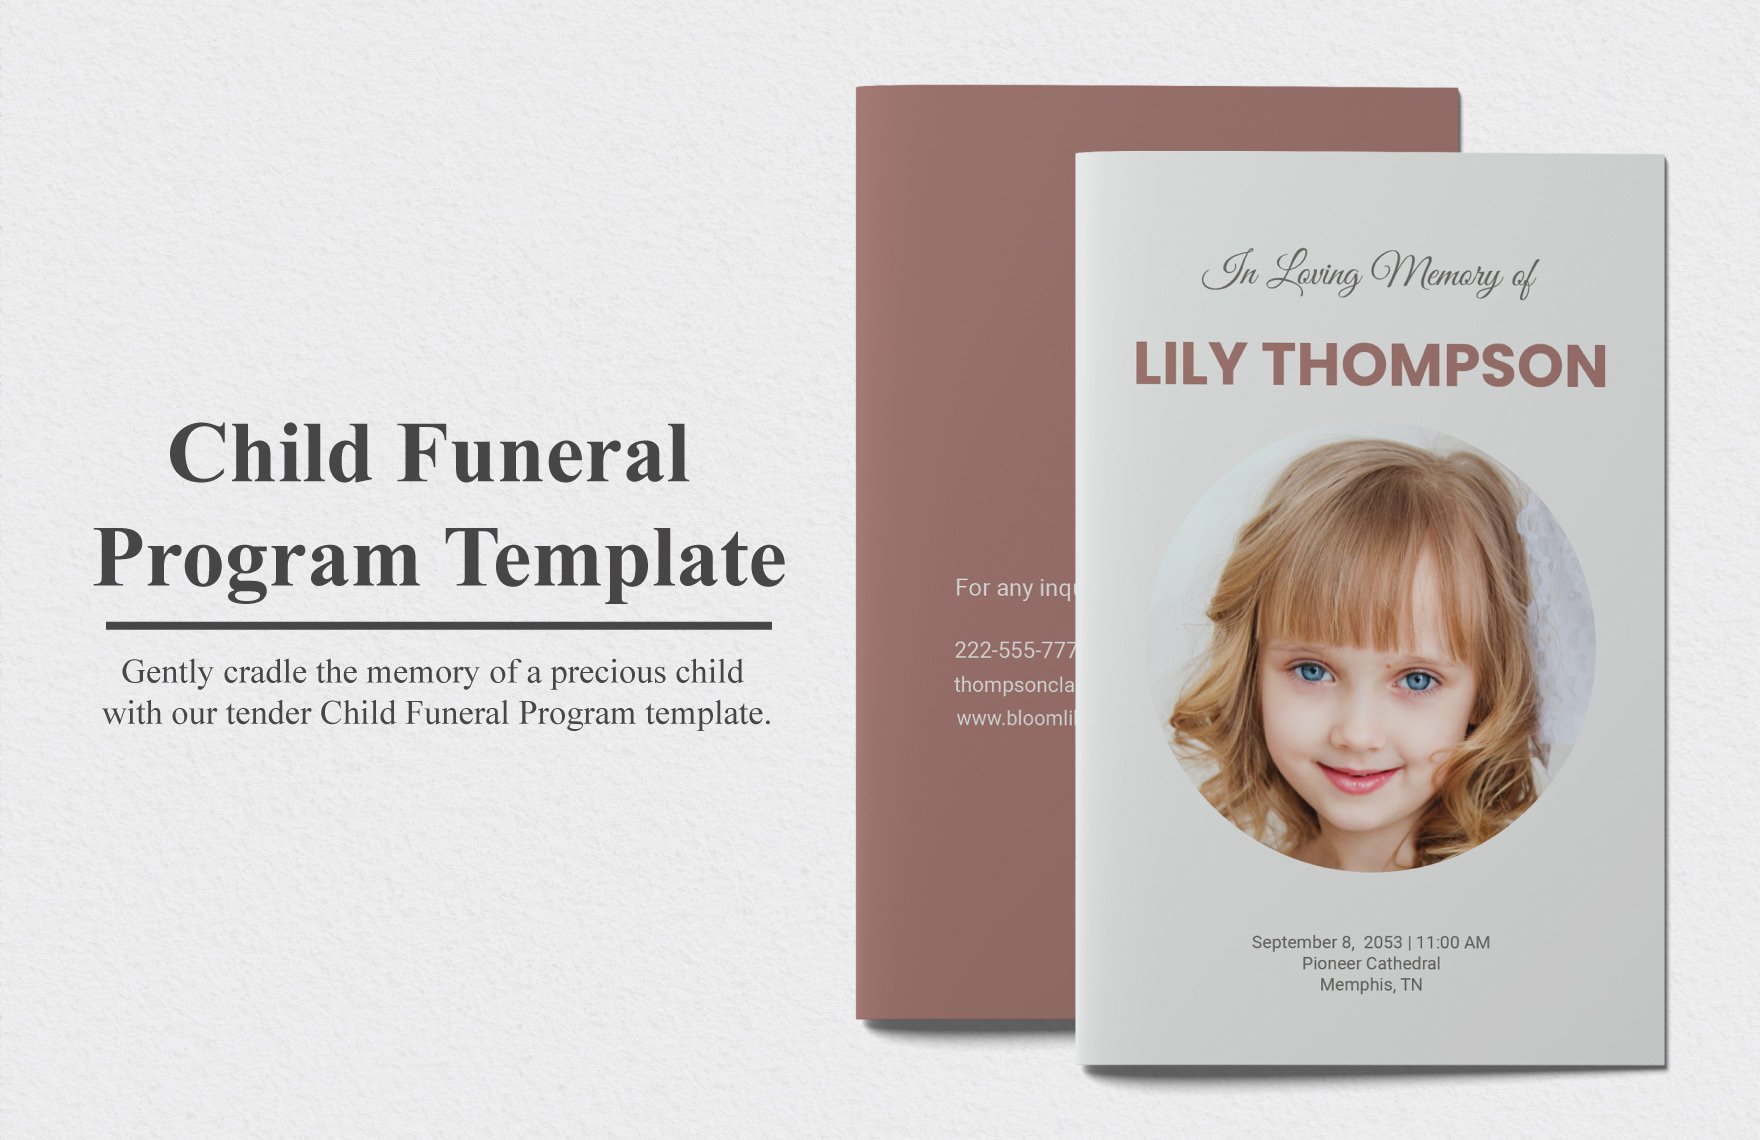 Child Funeral Program Template